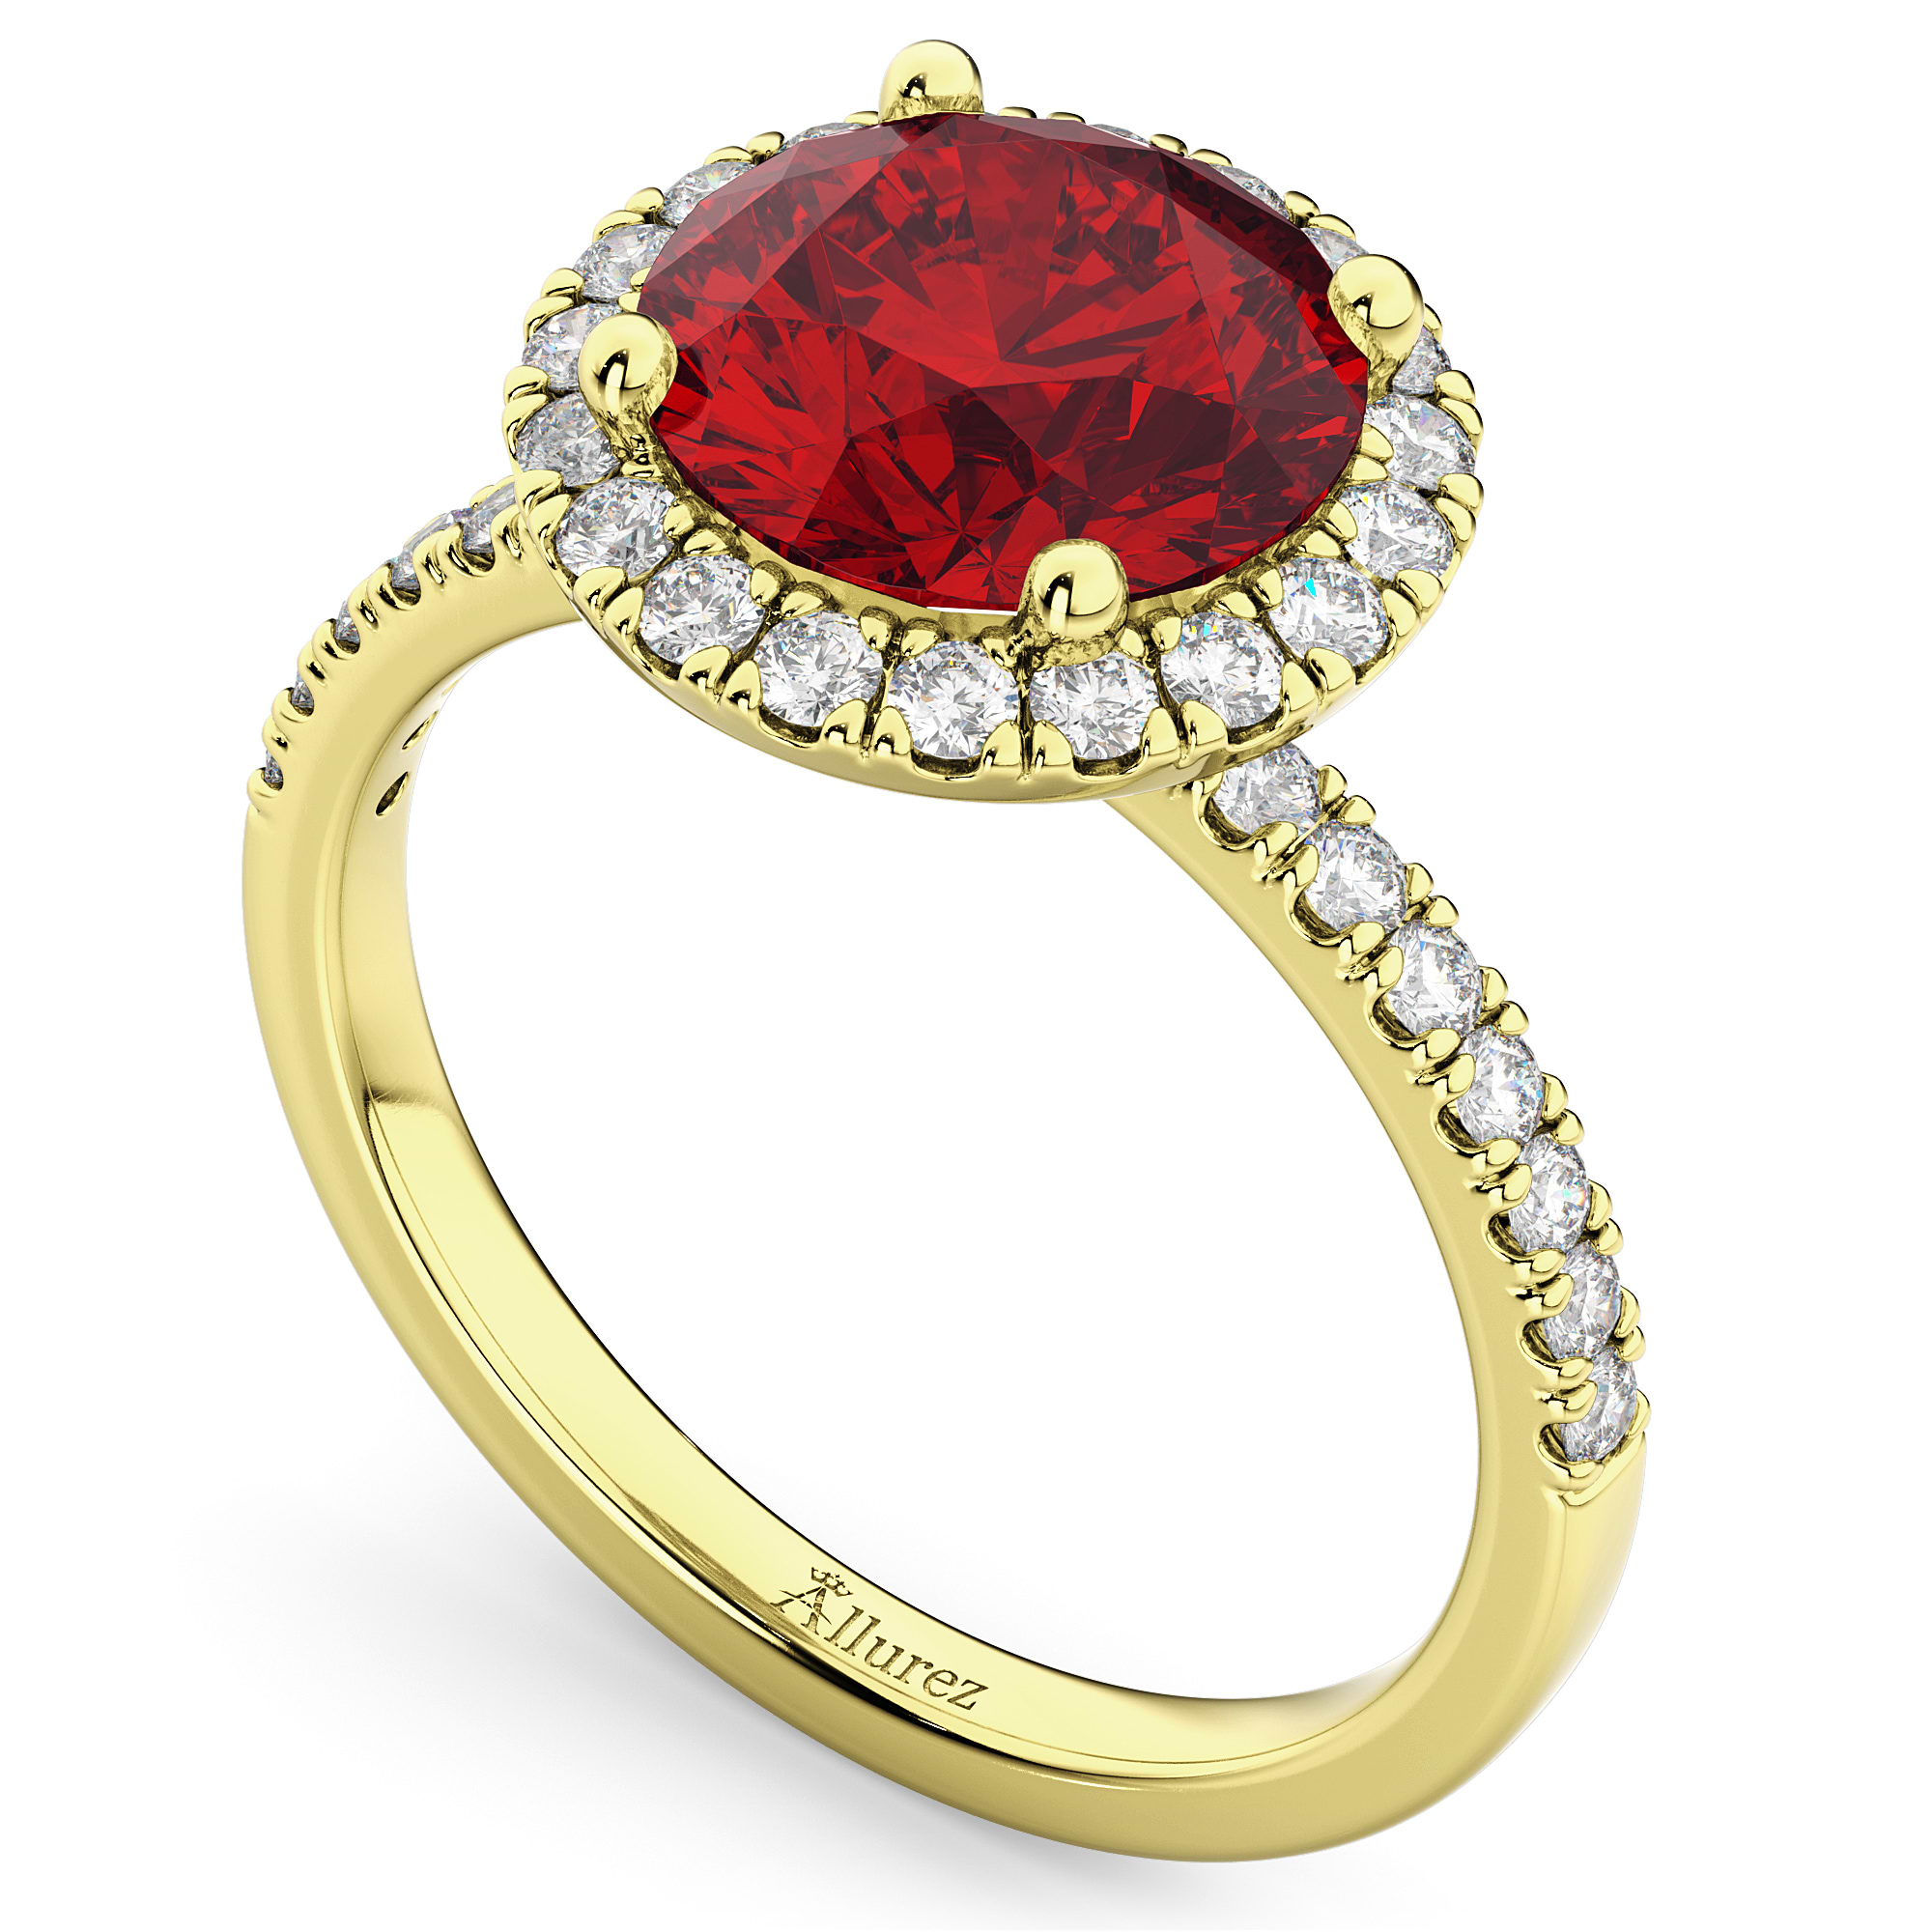 Halo Ruby & Diamond Engagement Ring 14K Yellow Gold 2.80ct